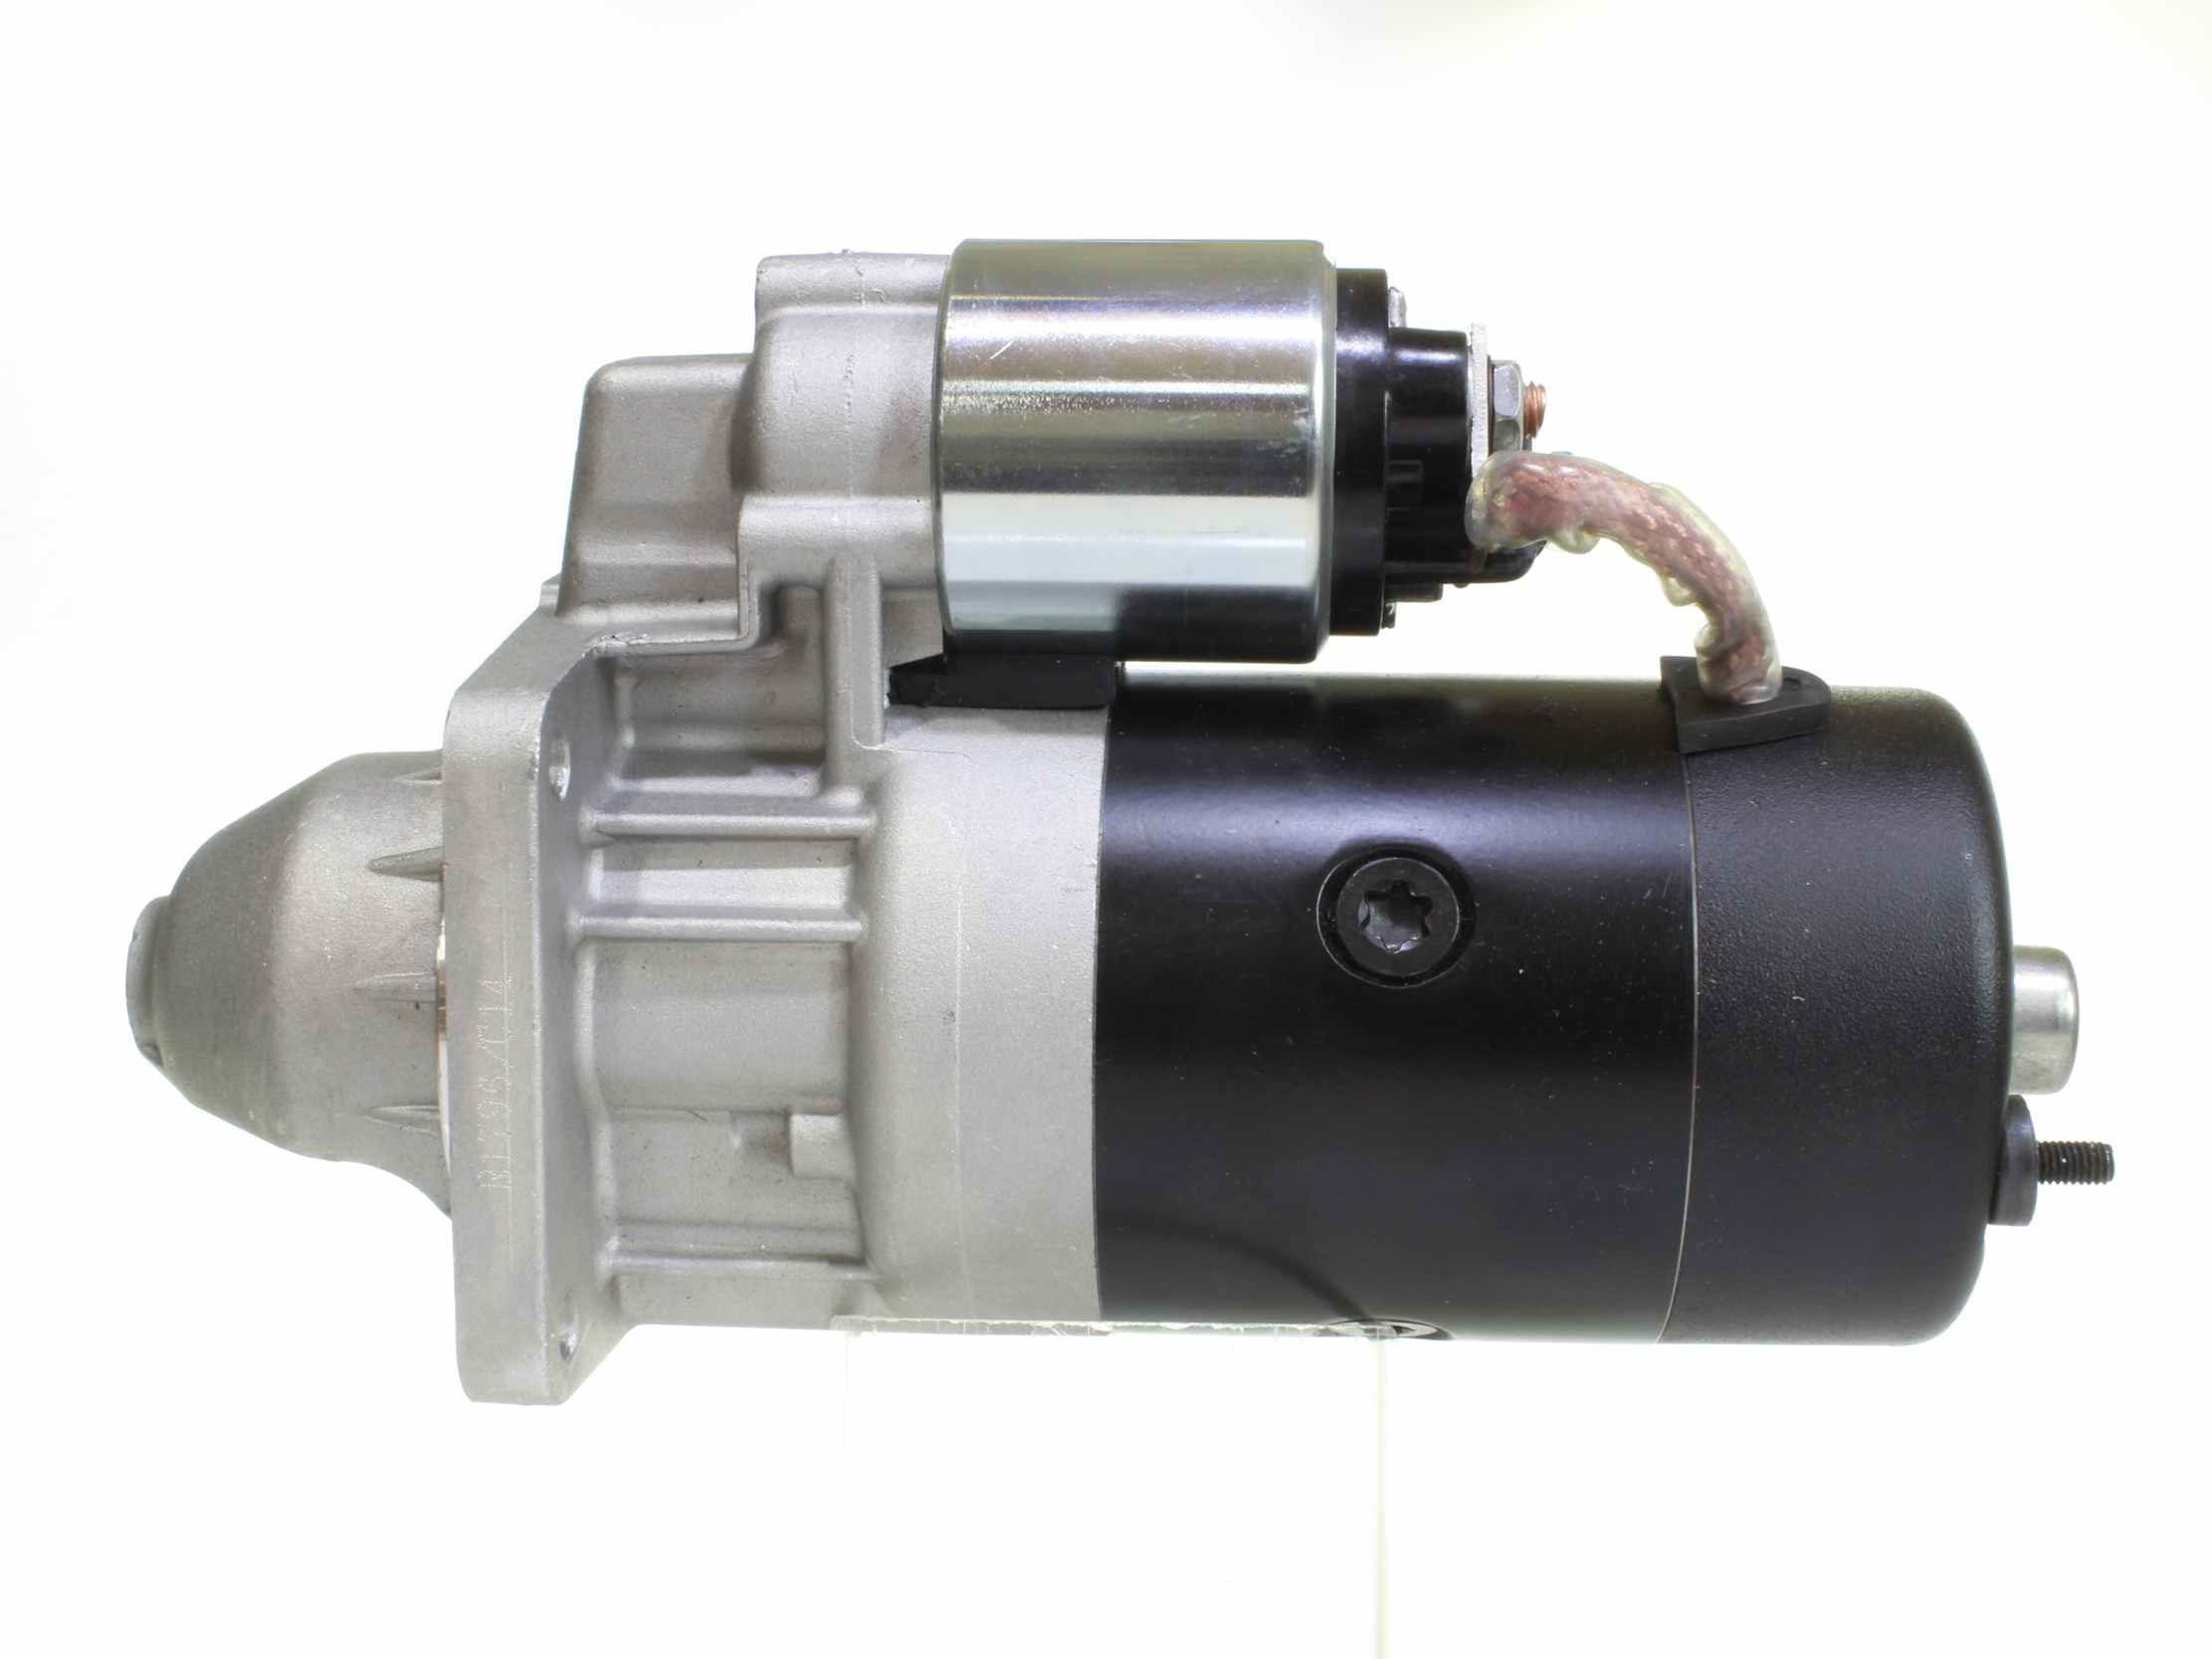 10439546 Engine starter motor ALANKO STR50194 review and test